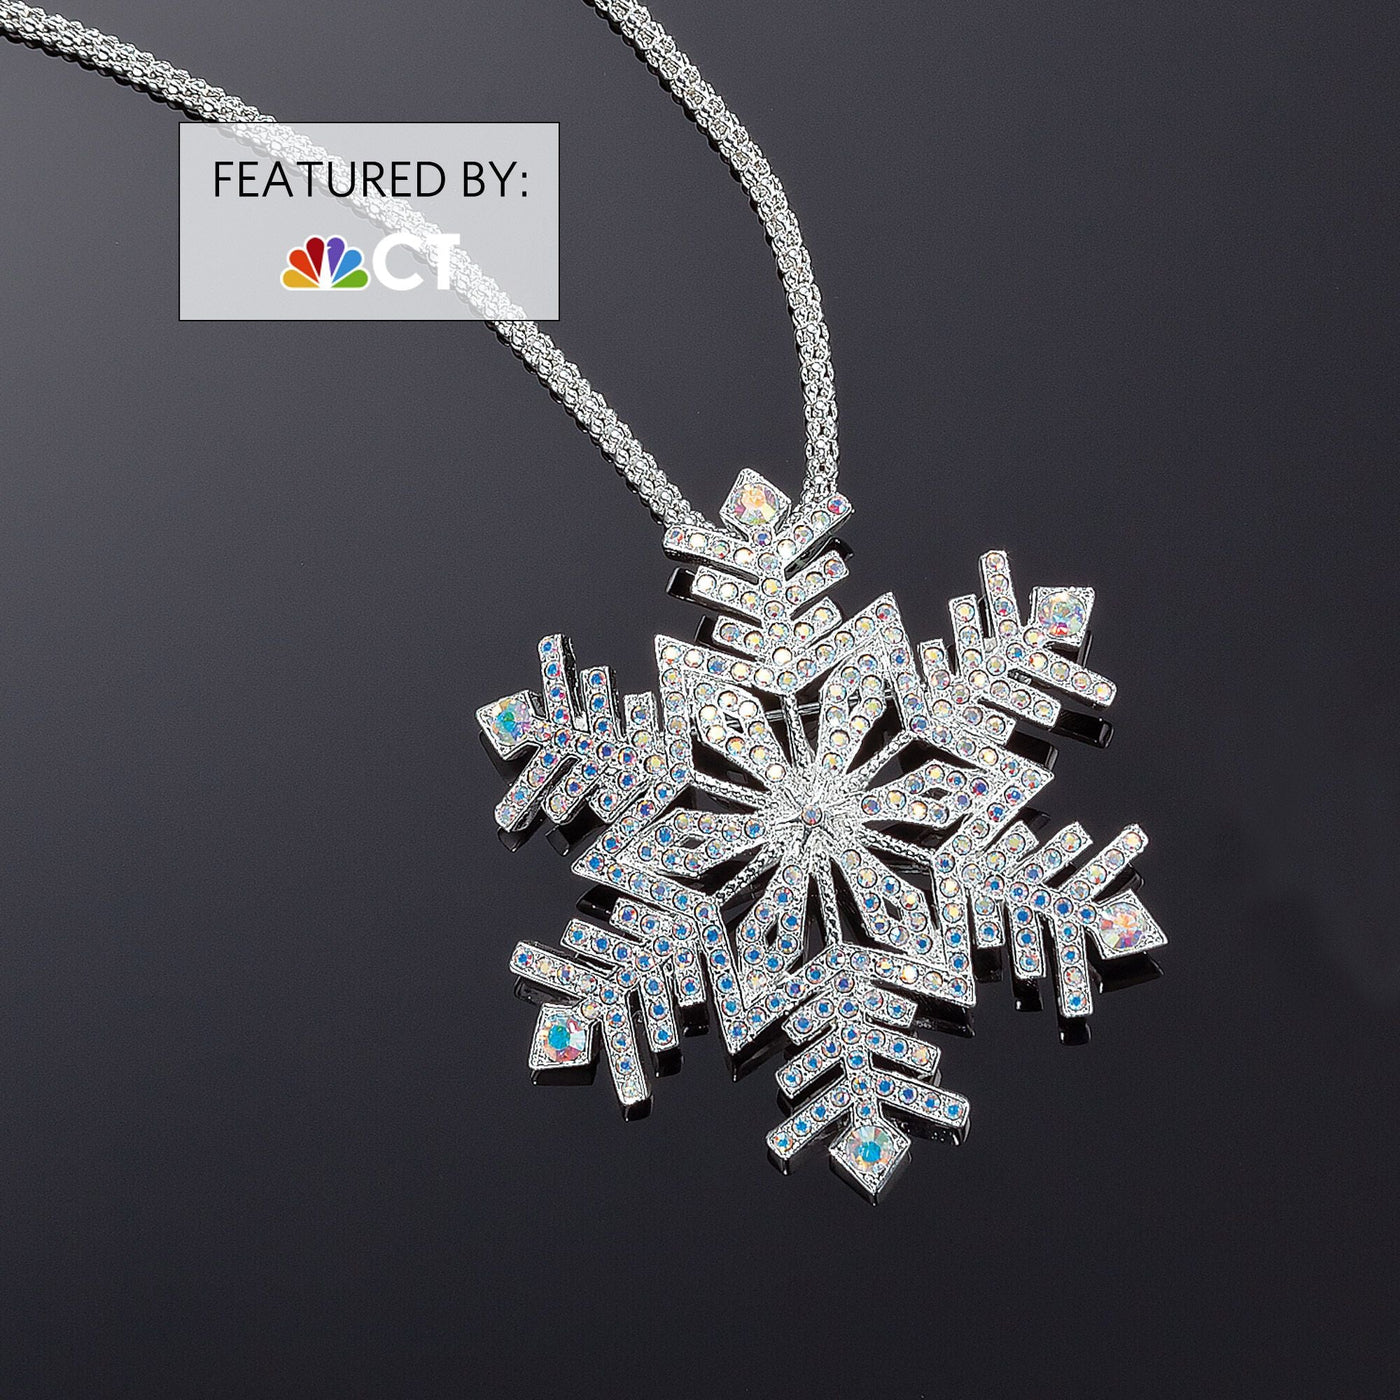 Daniel Lyons' Swarovski Crystal Snowflake Pendant Necklace